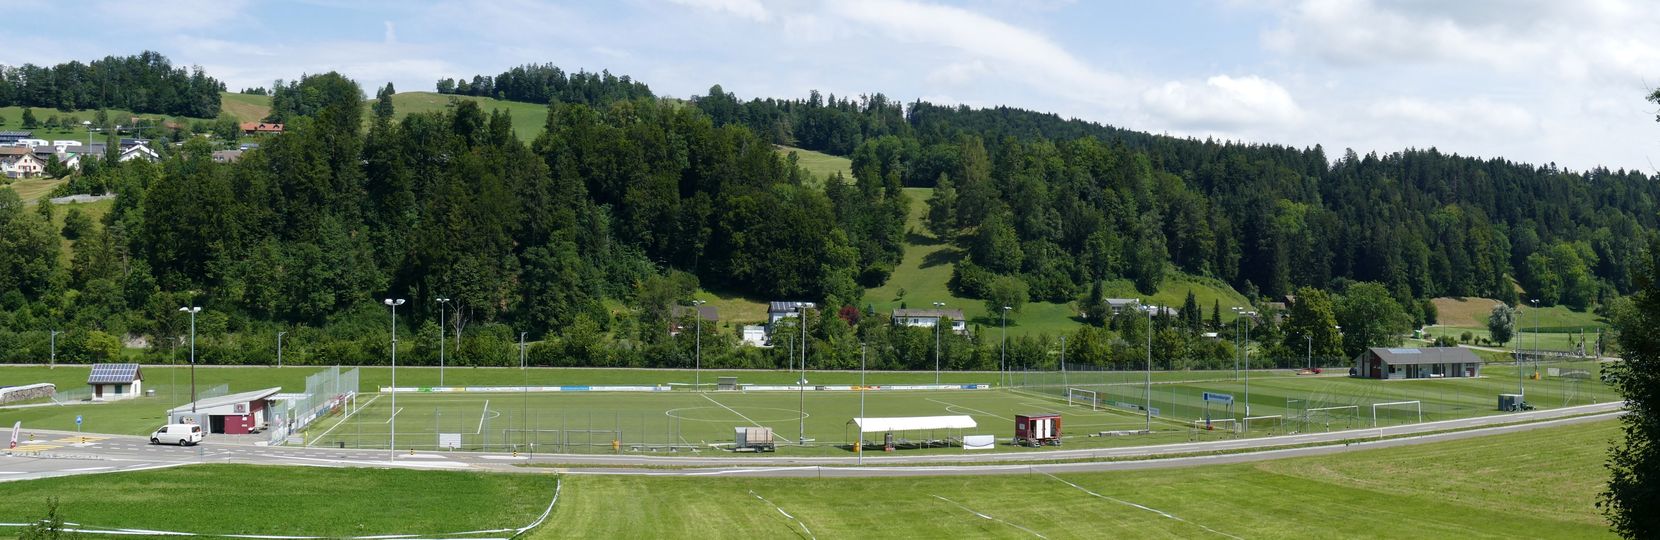 Panorama vom Fussballplatz in Bauma.